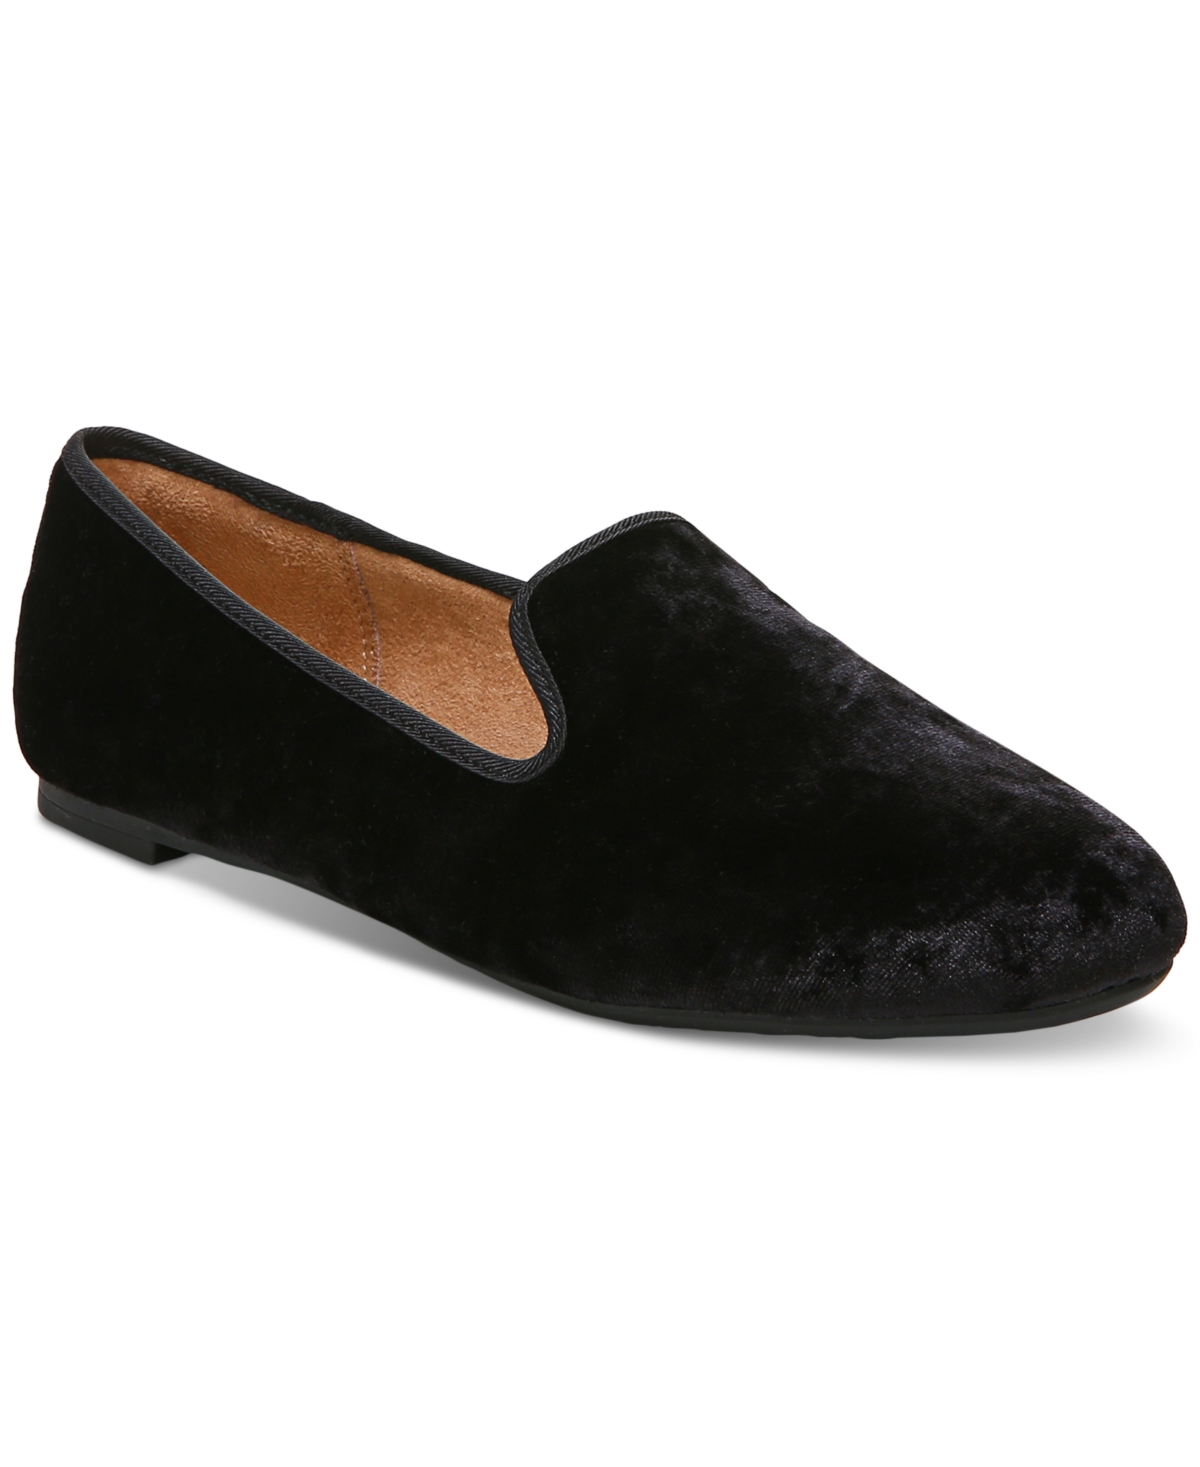 Women's Crissy Loafer Flats - Black Glossy Patent